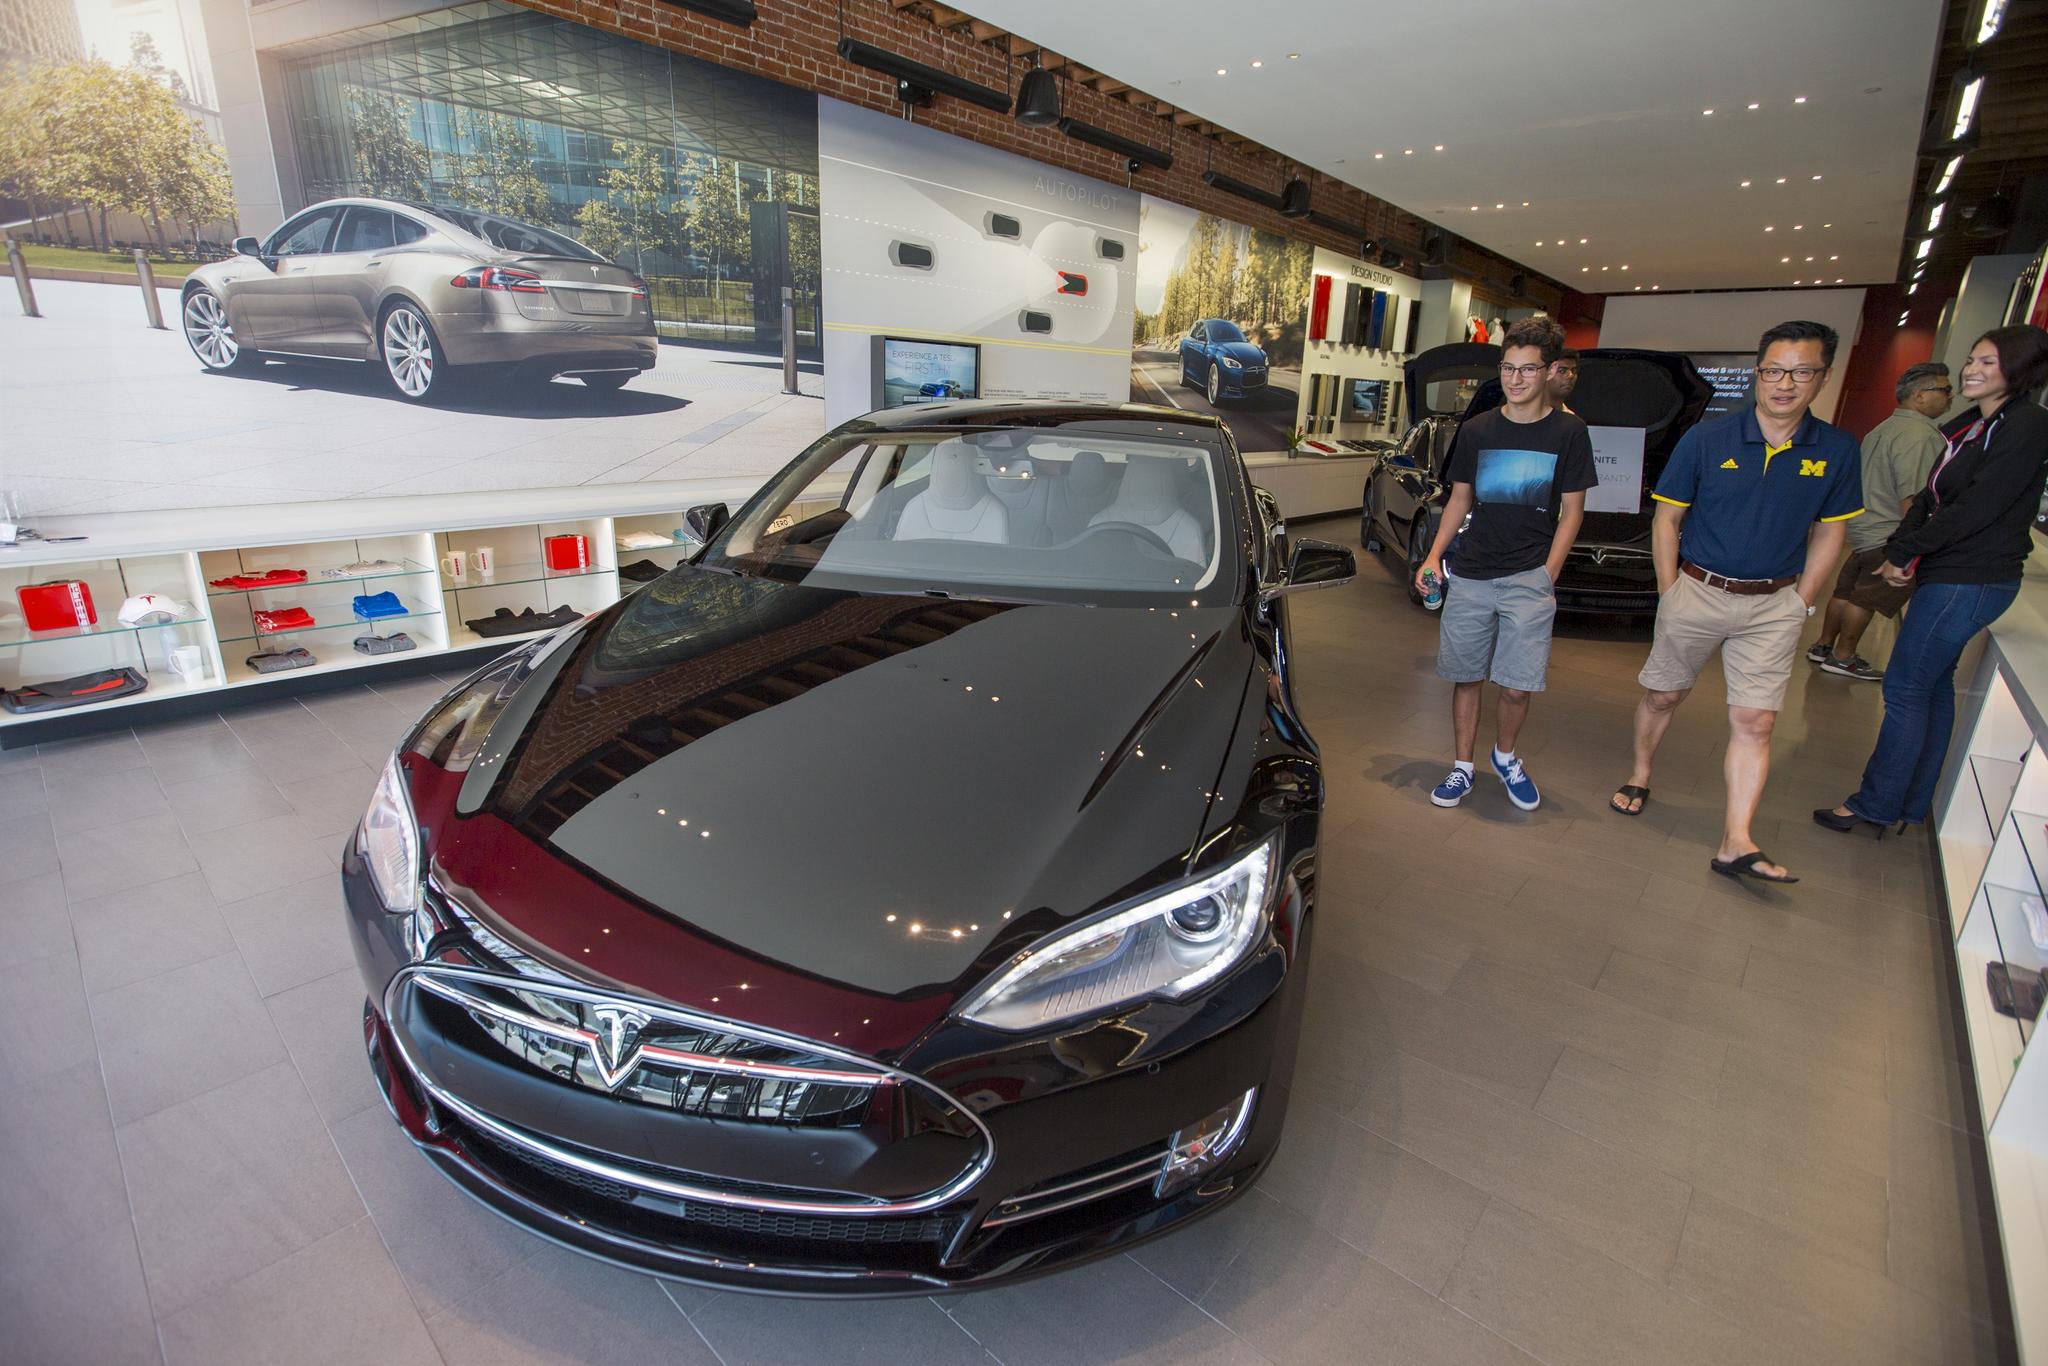 Potensielle kunder tar en titt på en Tesla 85D i en butikk i Pasadena i California.